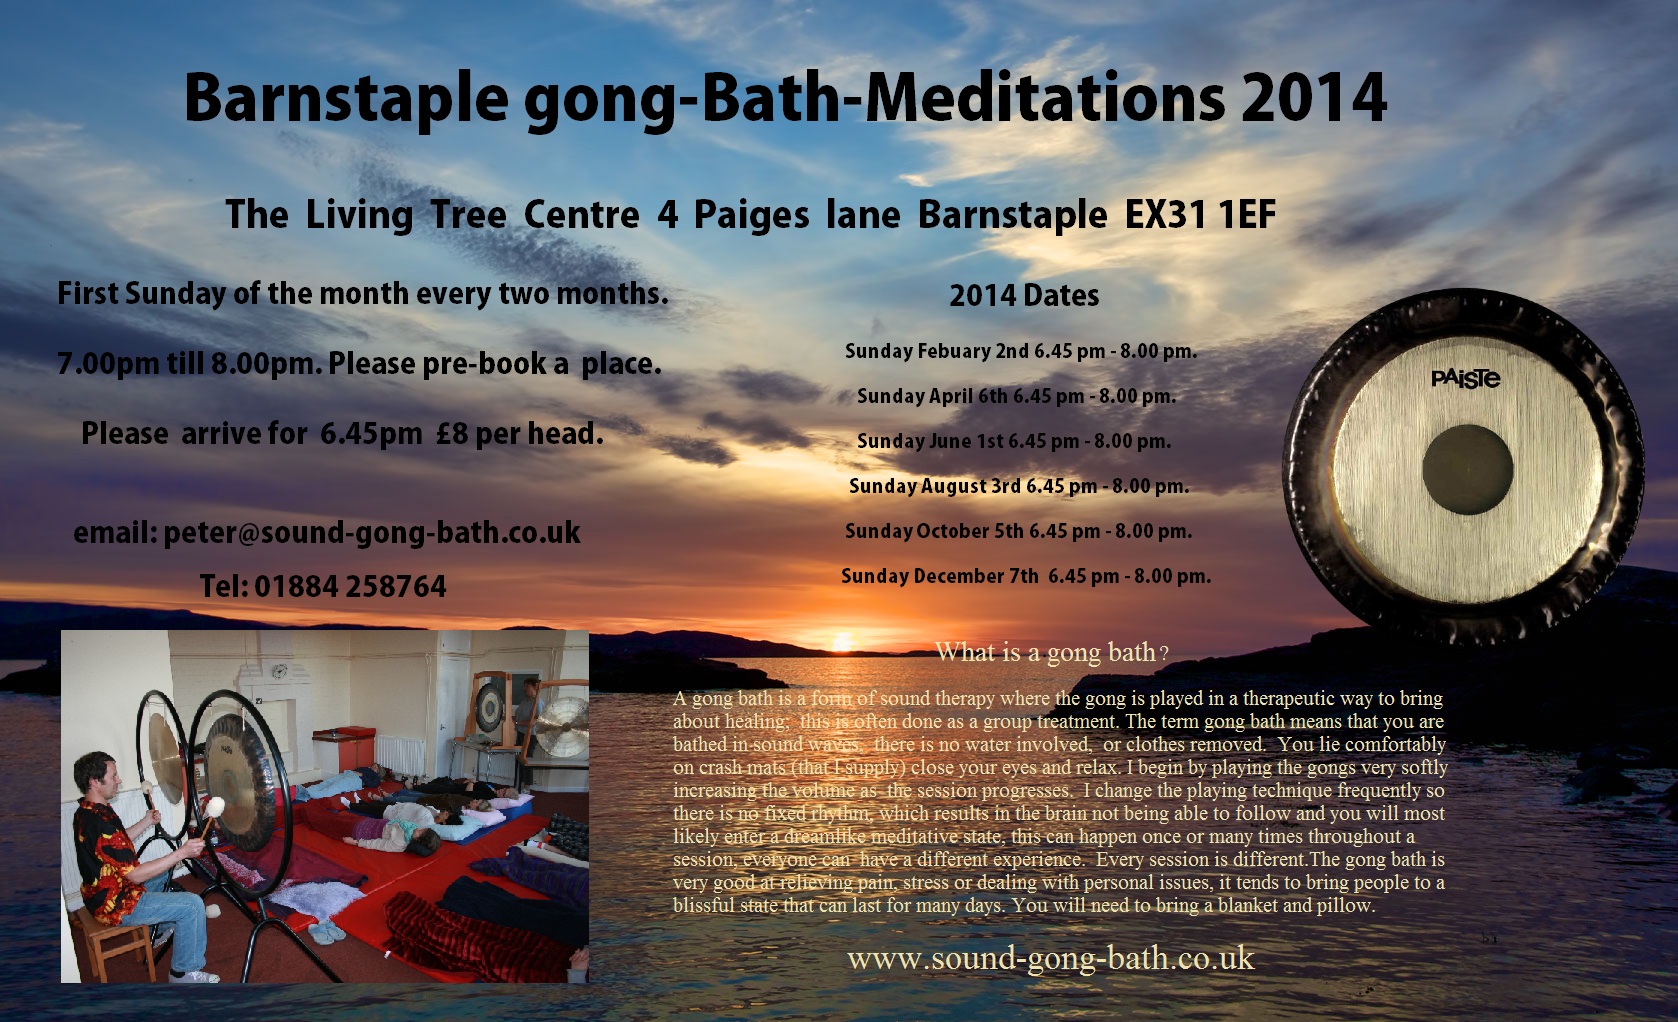 BARNSTAPLE DEVON - Barnstaple Gong Bath Meditation.  3rd August  2014